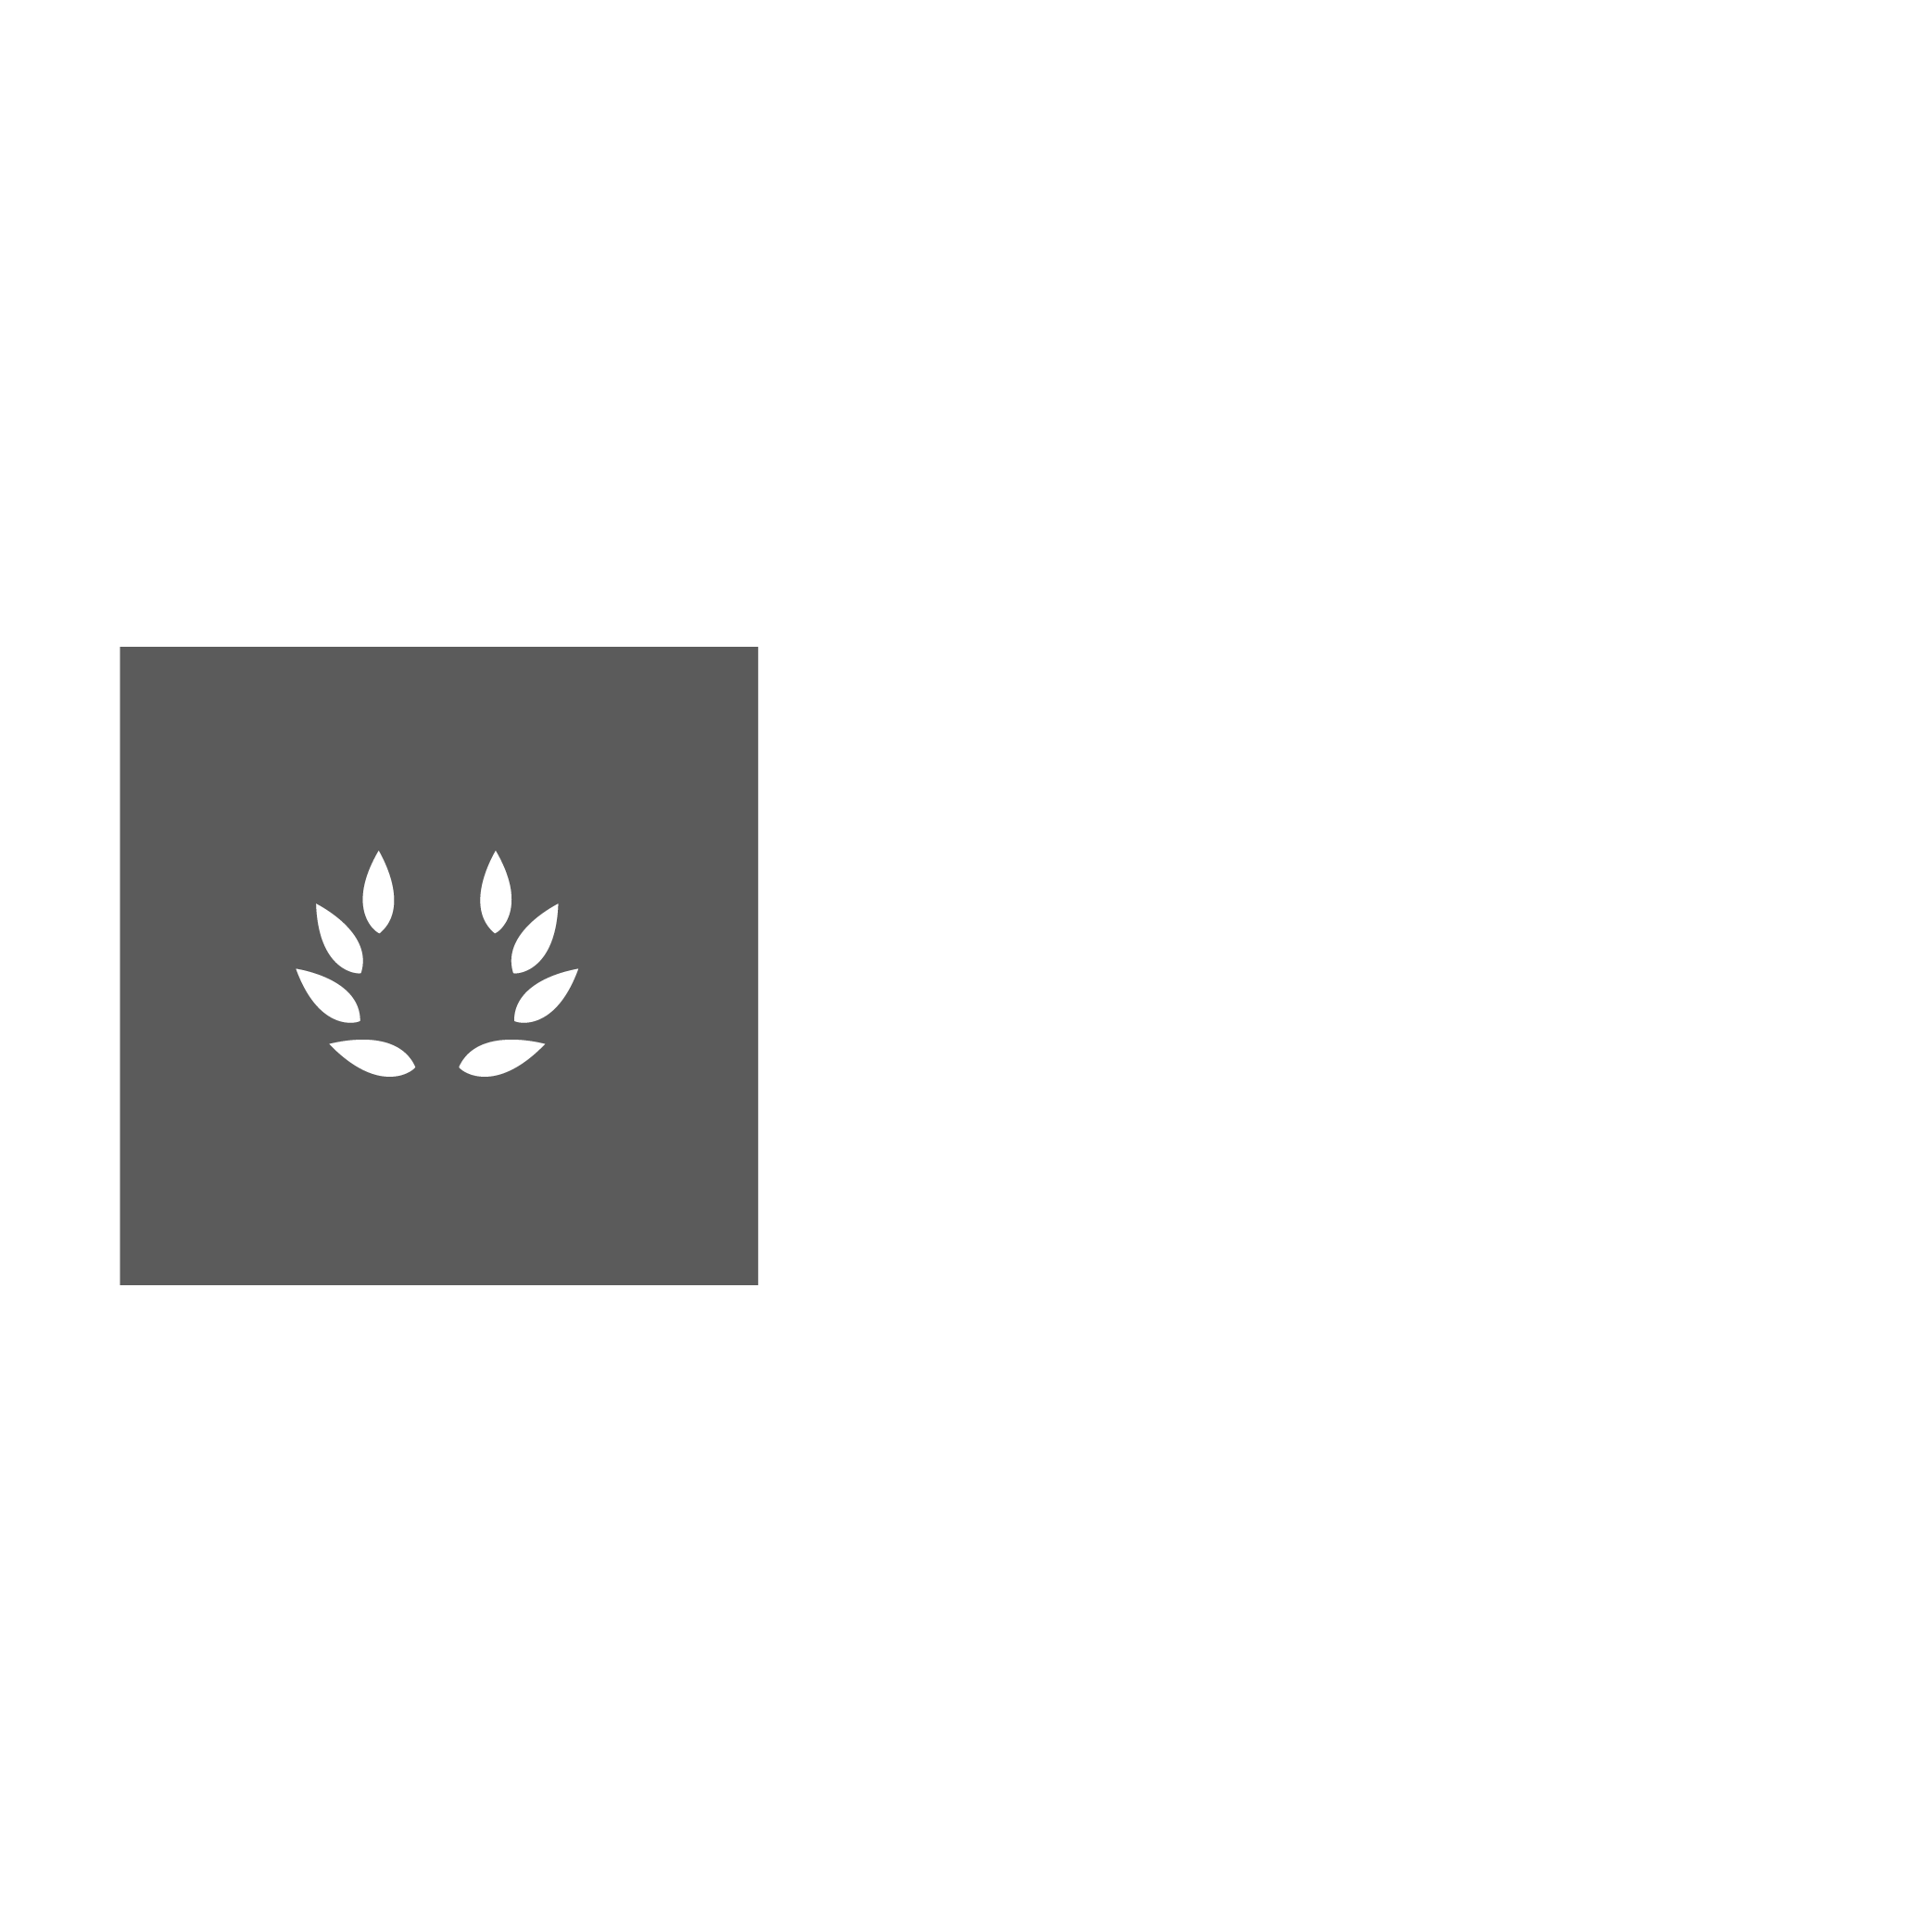 Motion design awards